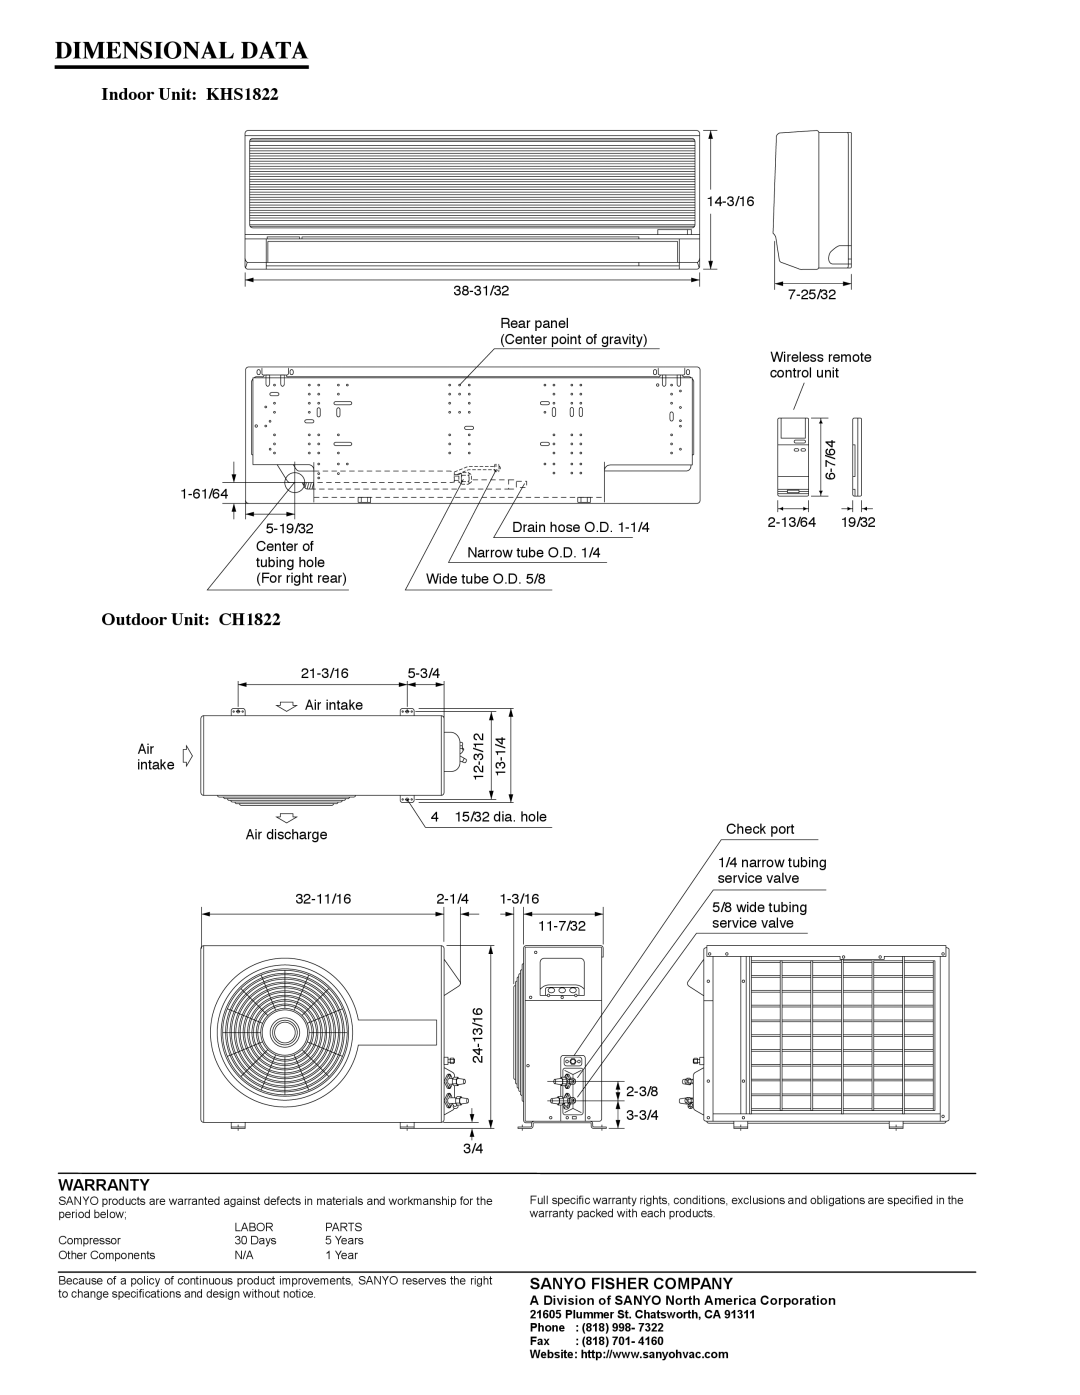 Sanyo warranty Dimensional Data, Indoor Unit: KHS1822, Outdoor Unit CH1822, Warranty, Sanyo Fisher Company 